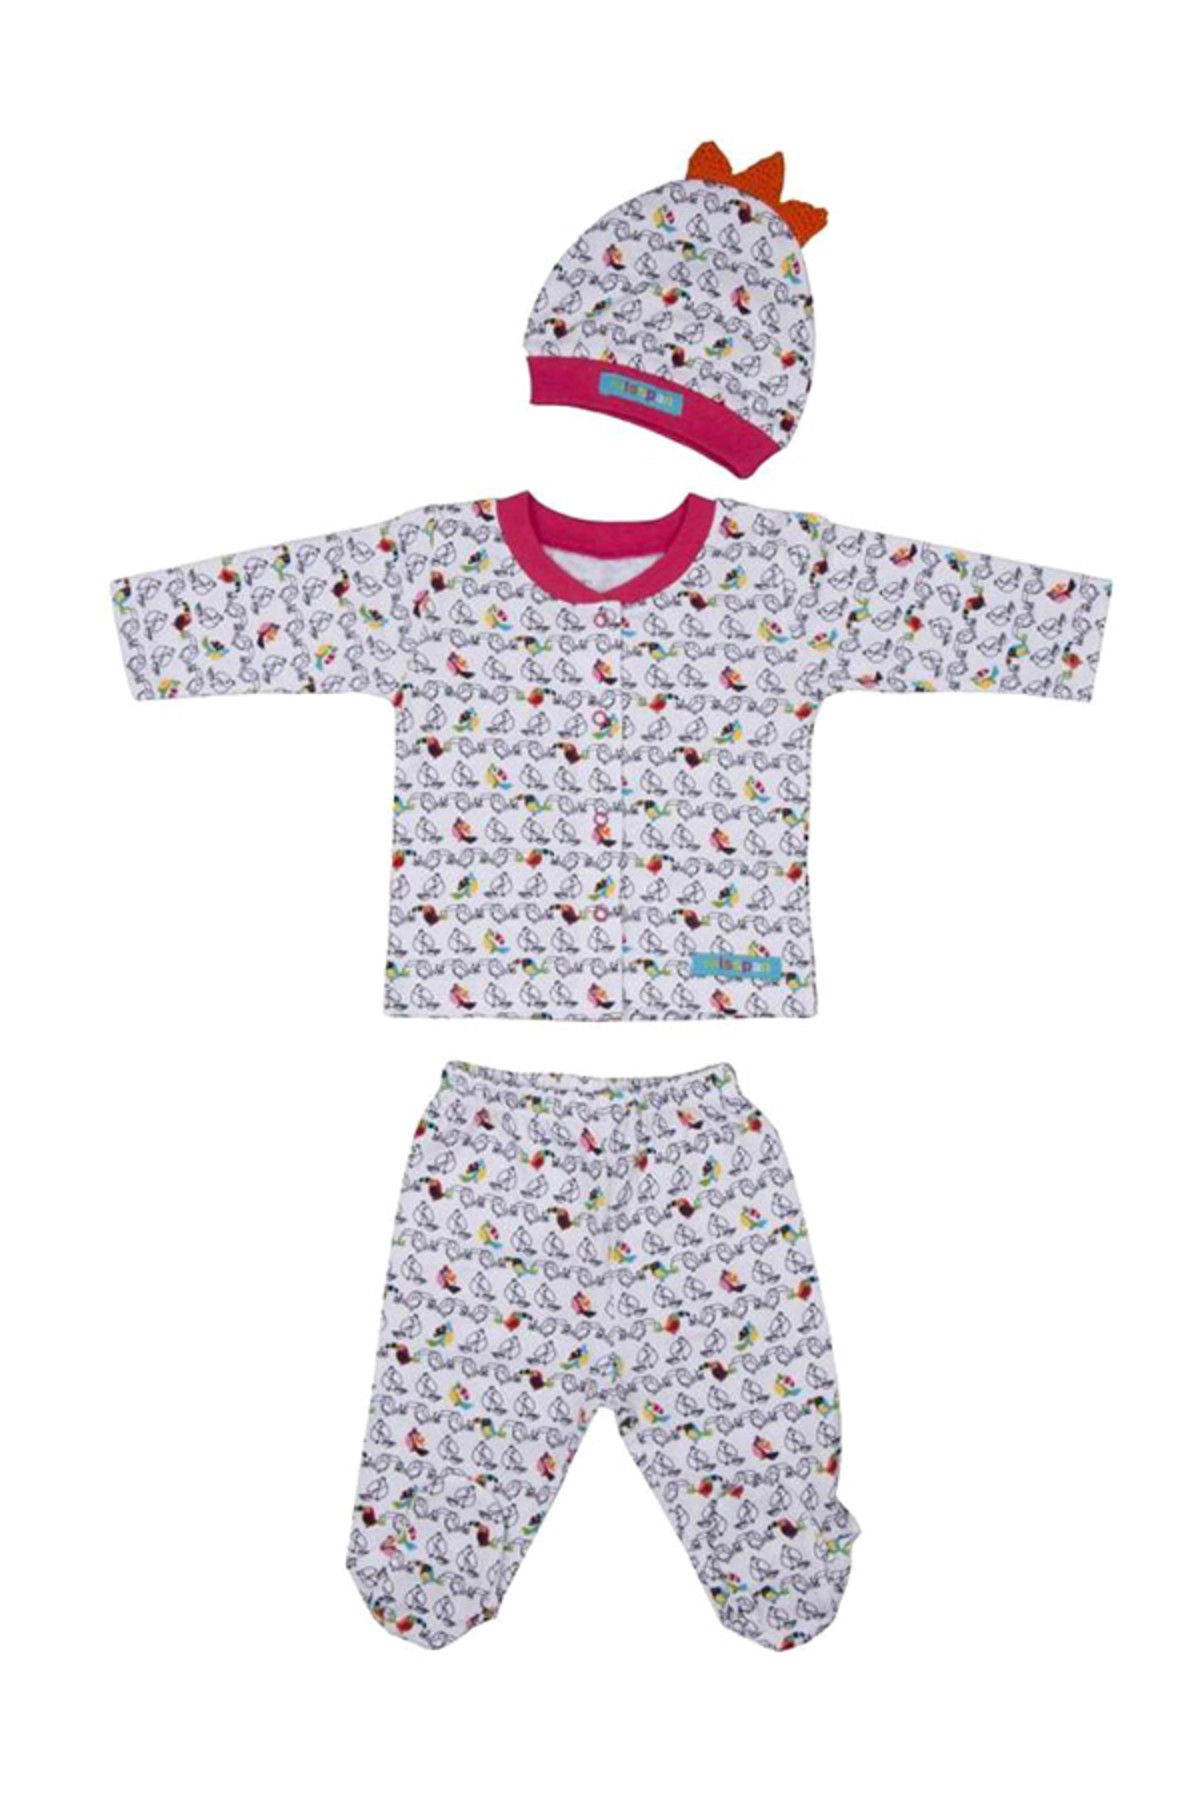 Bebepan 1670 Tropical Bebek Pijama Takımı Desenli 0-3 Ay